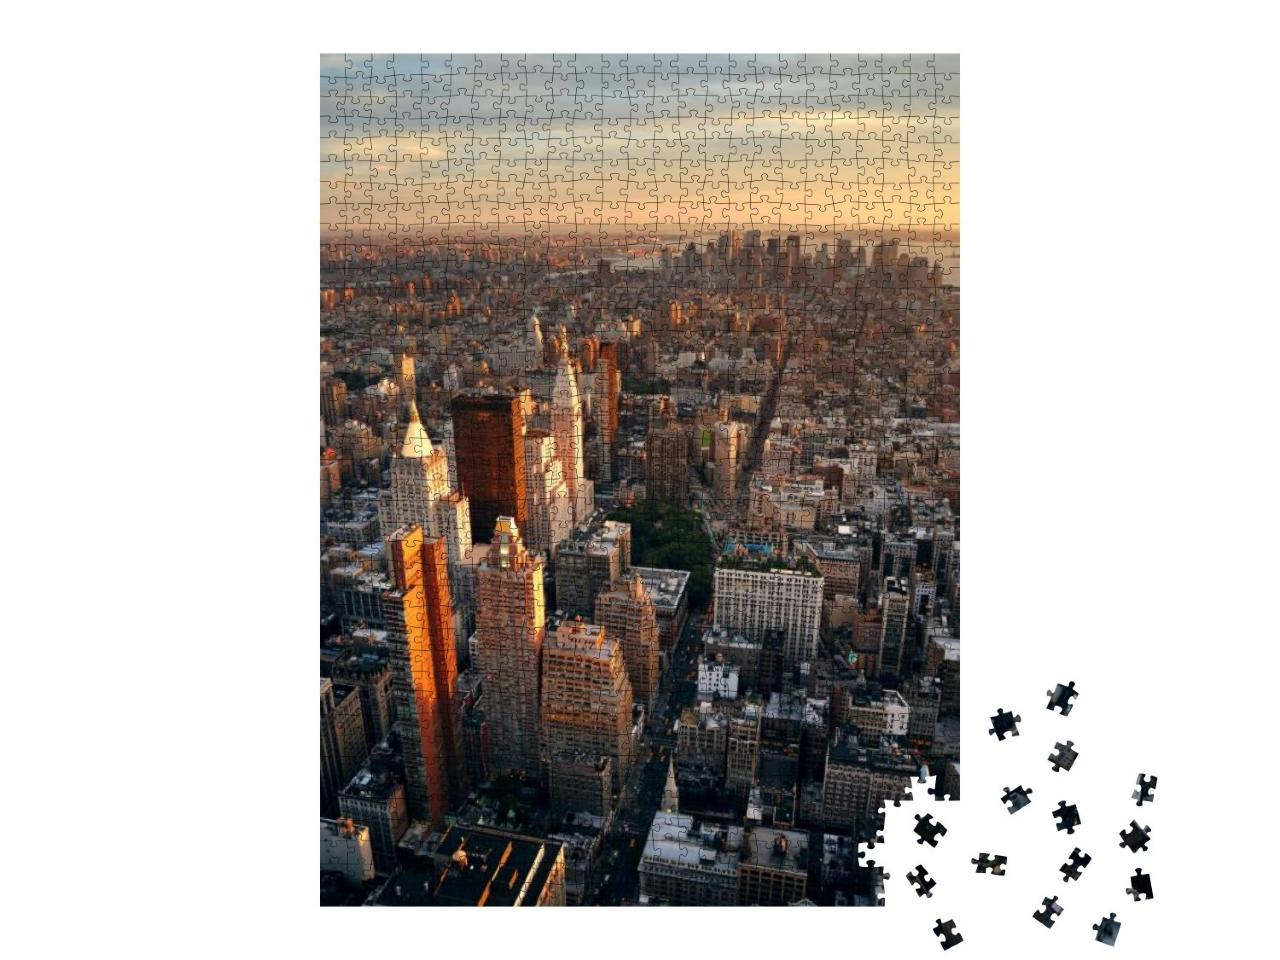 Puzzle 1000 Teile „Sonnenuntergang über New York City“